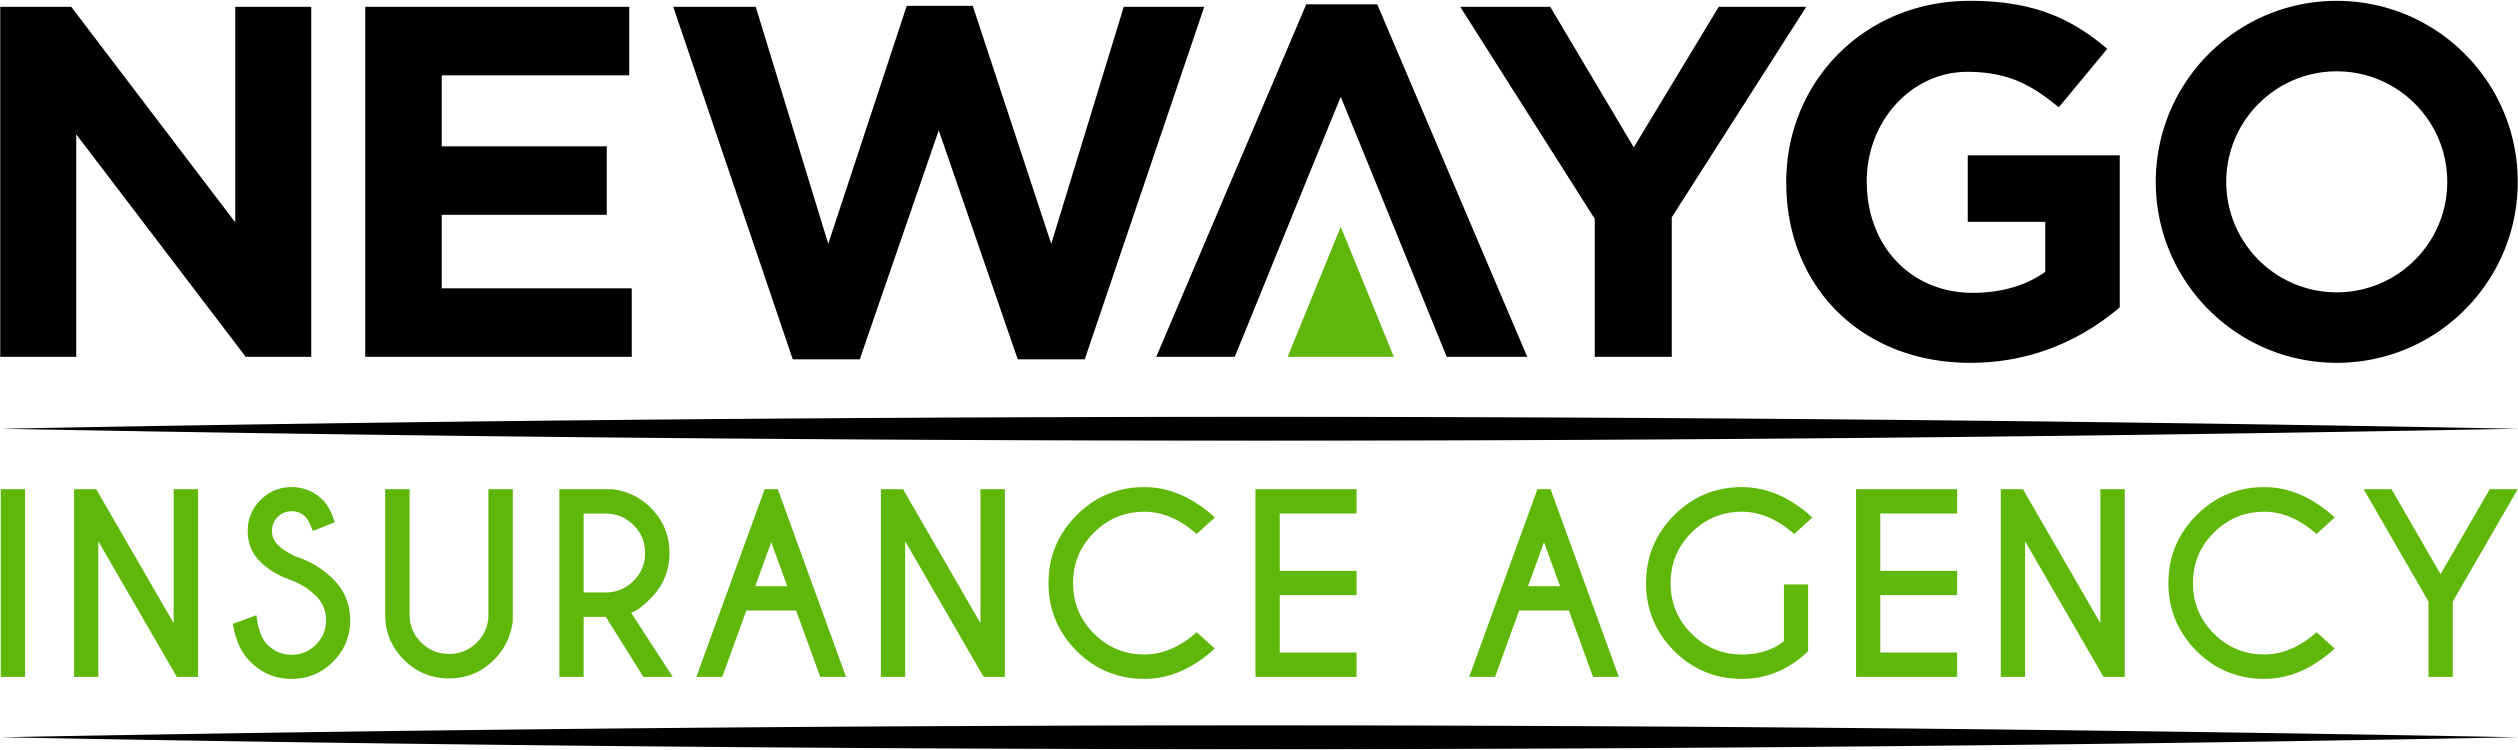 Newaygo-Insurance-Agency-Logo-Transparent-Background